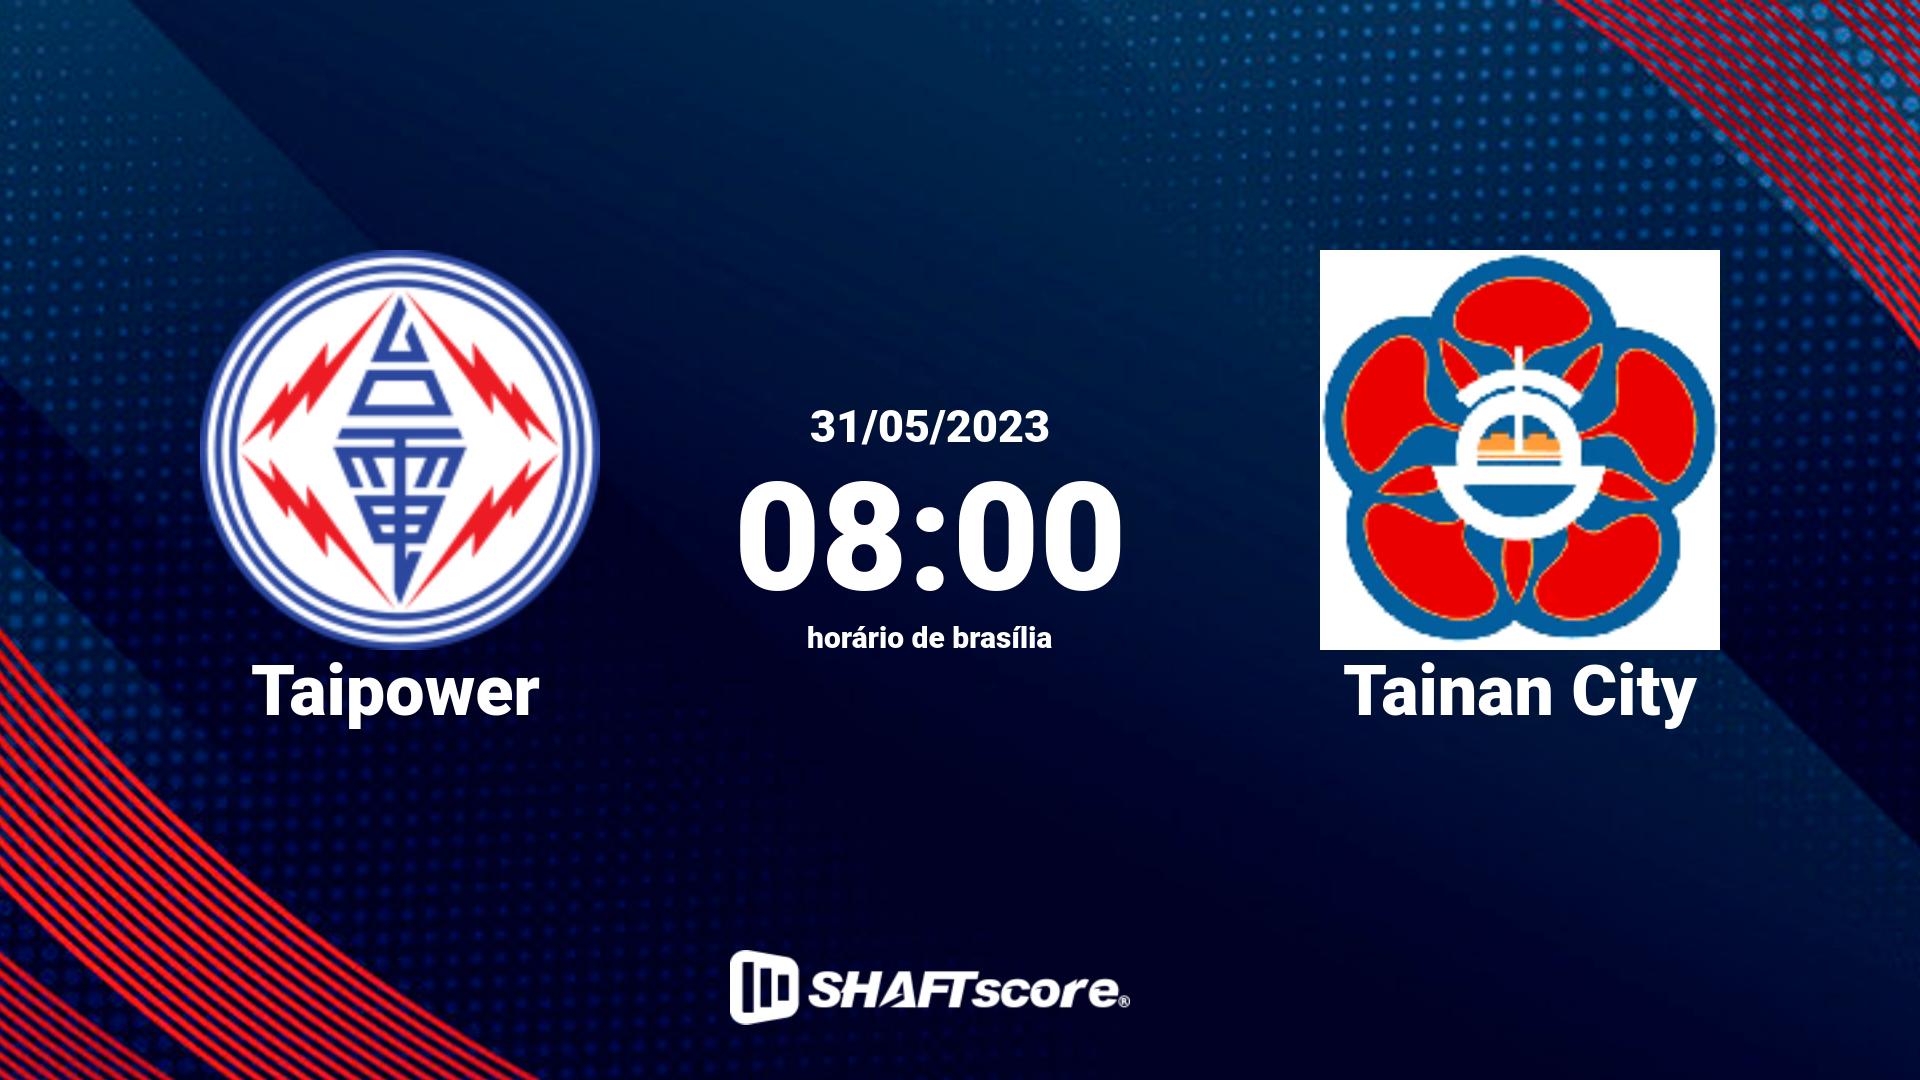 Estatísticas do jogo Taipower vs Tainan City 31.05 08:00